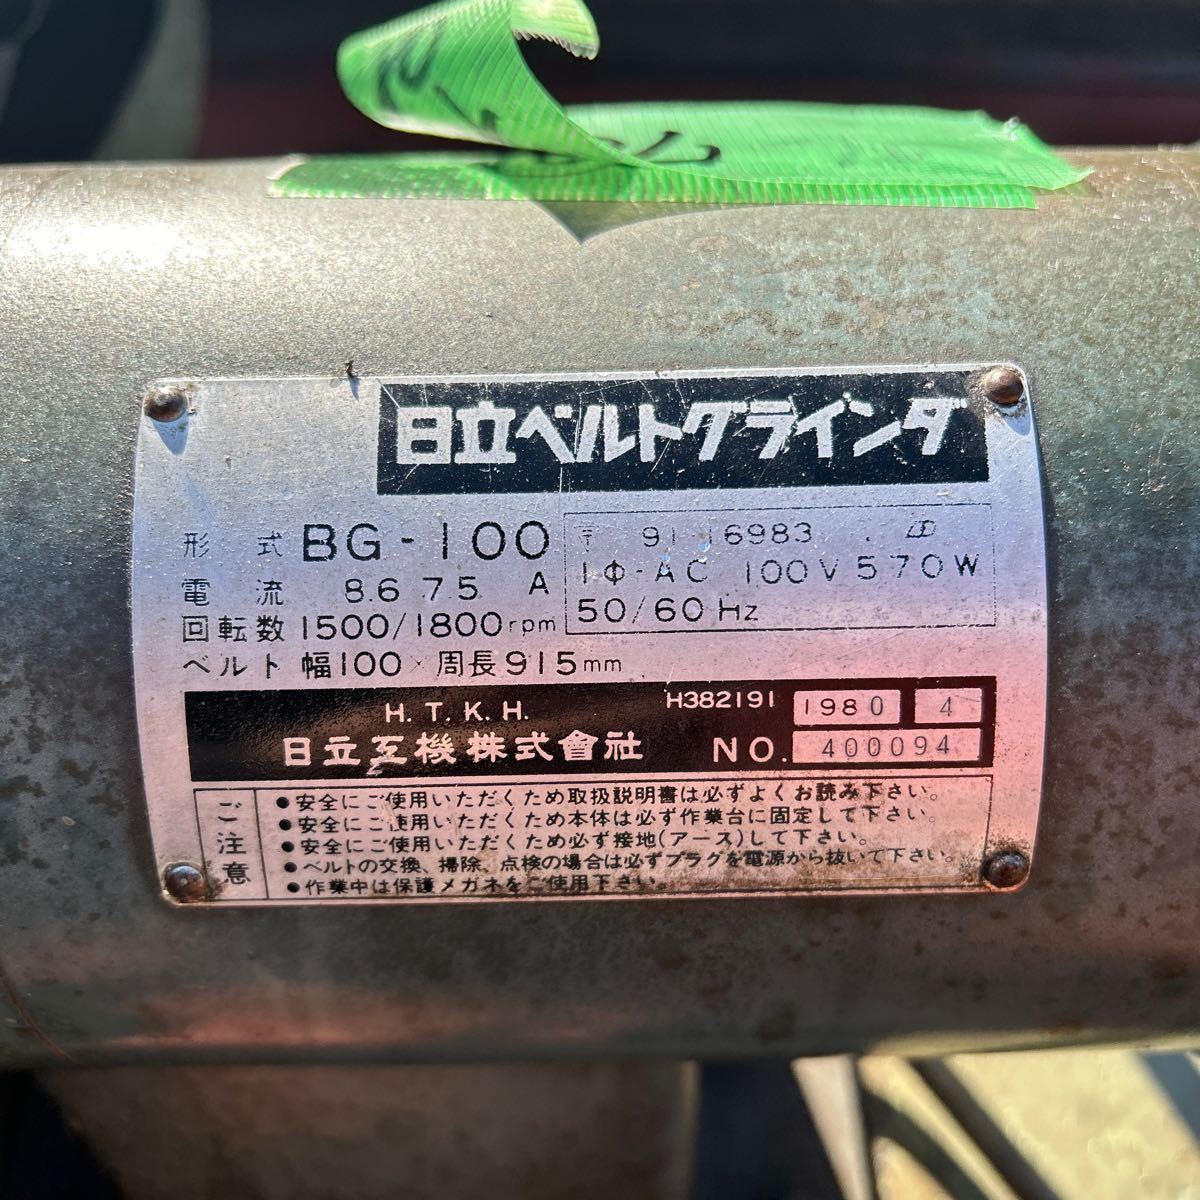 SKT6106 HITACHI Hitachi grinder BG-100 100V 50/60Hz working bench attaching [ operation verification settled ]